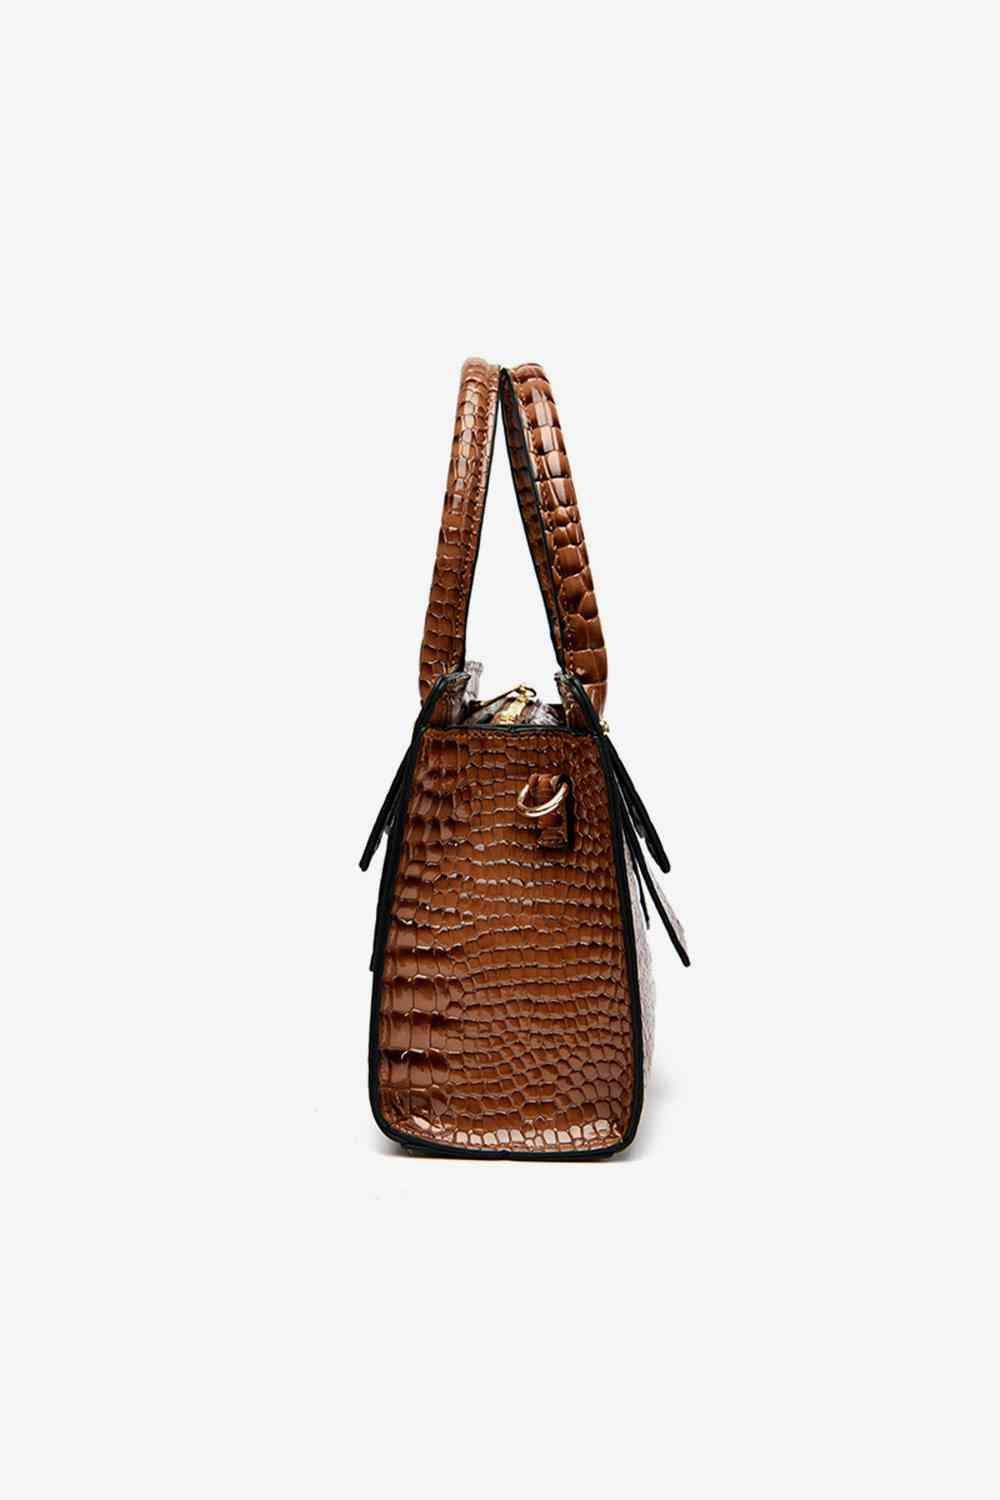 Textured PU Leather Handbag - Just Enuff Sexy